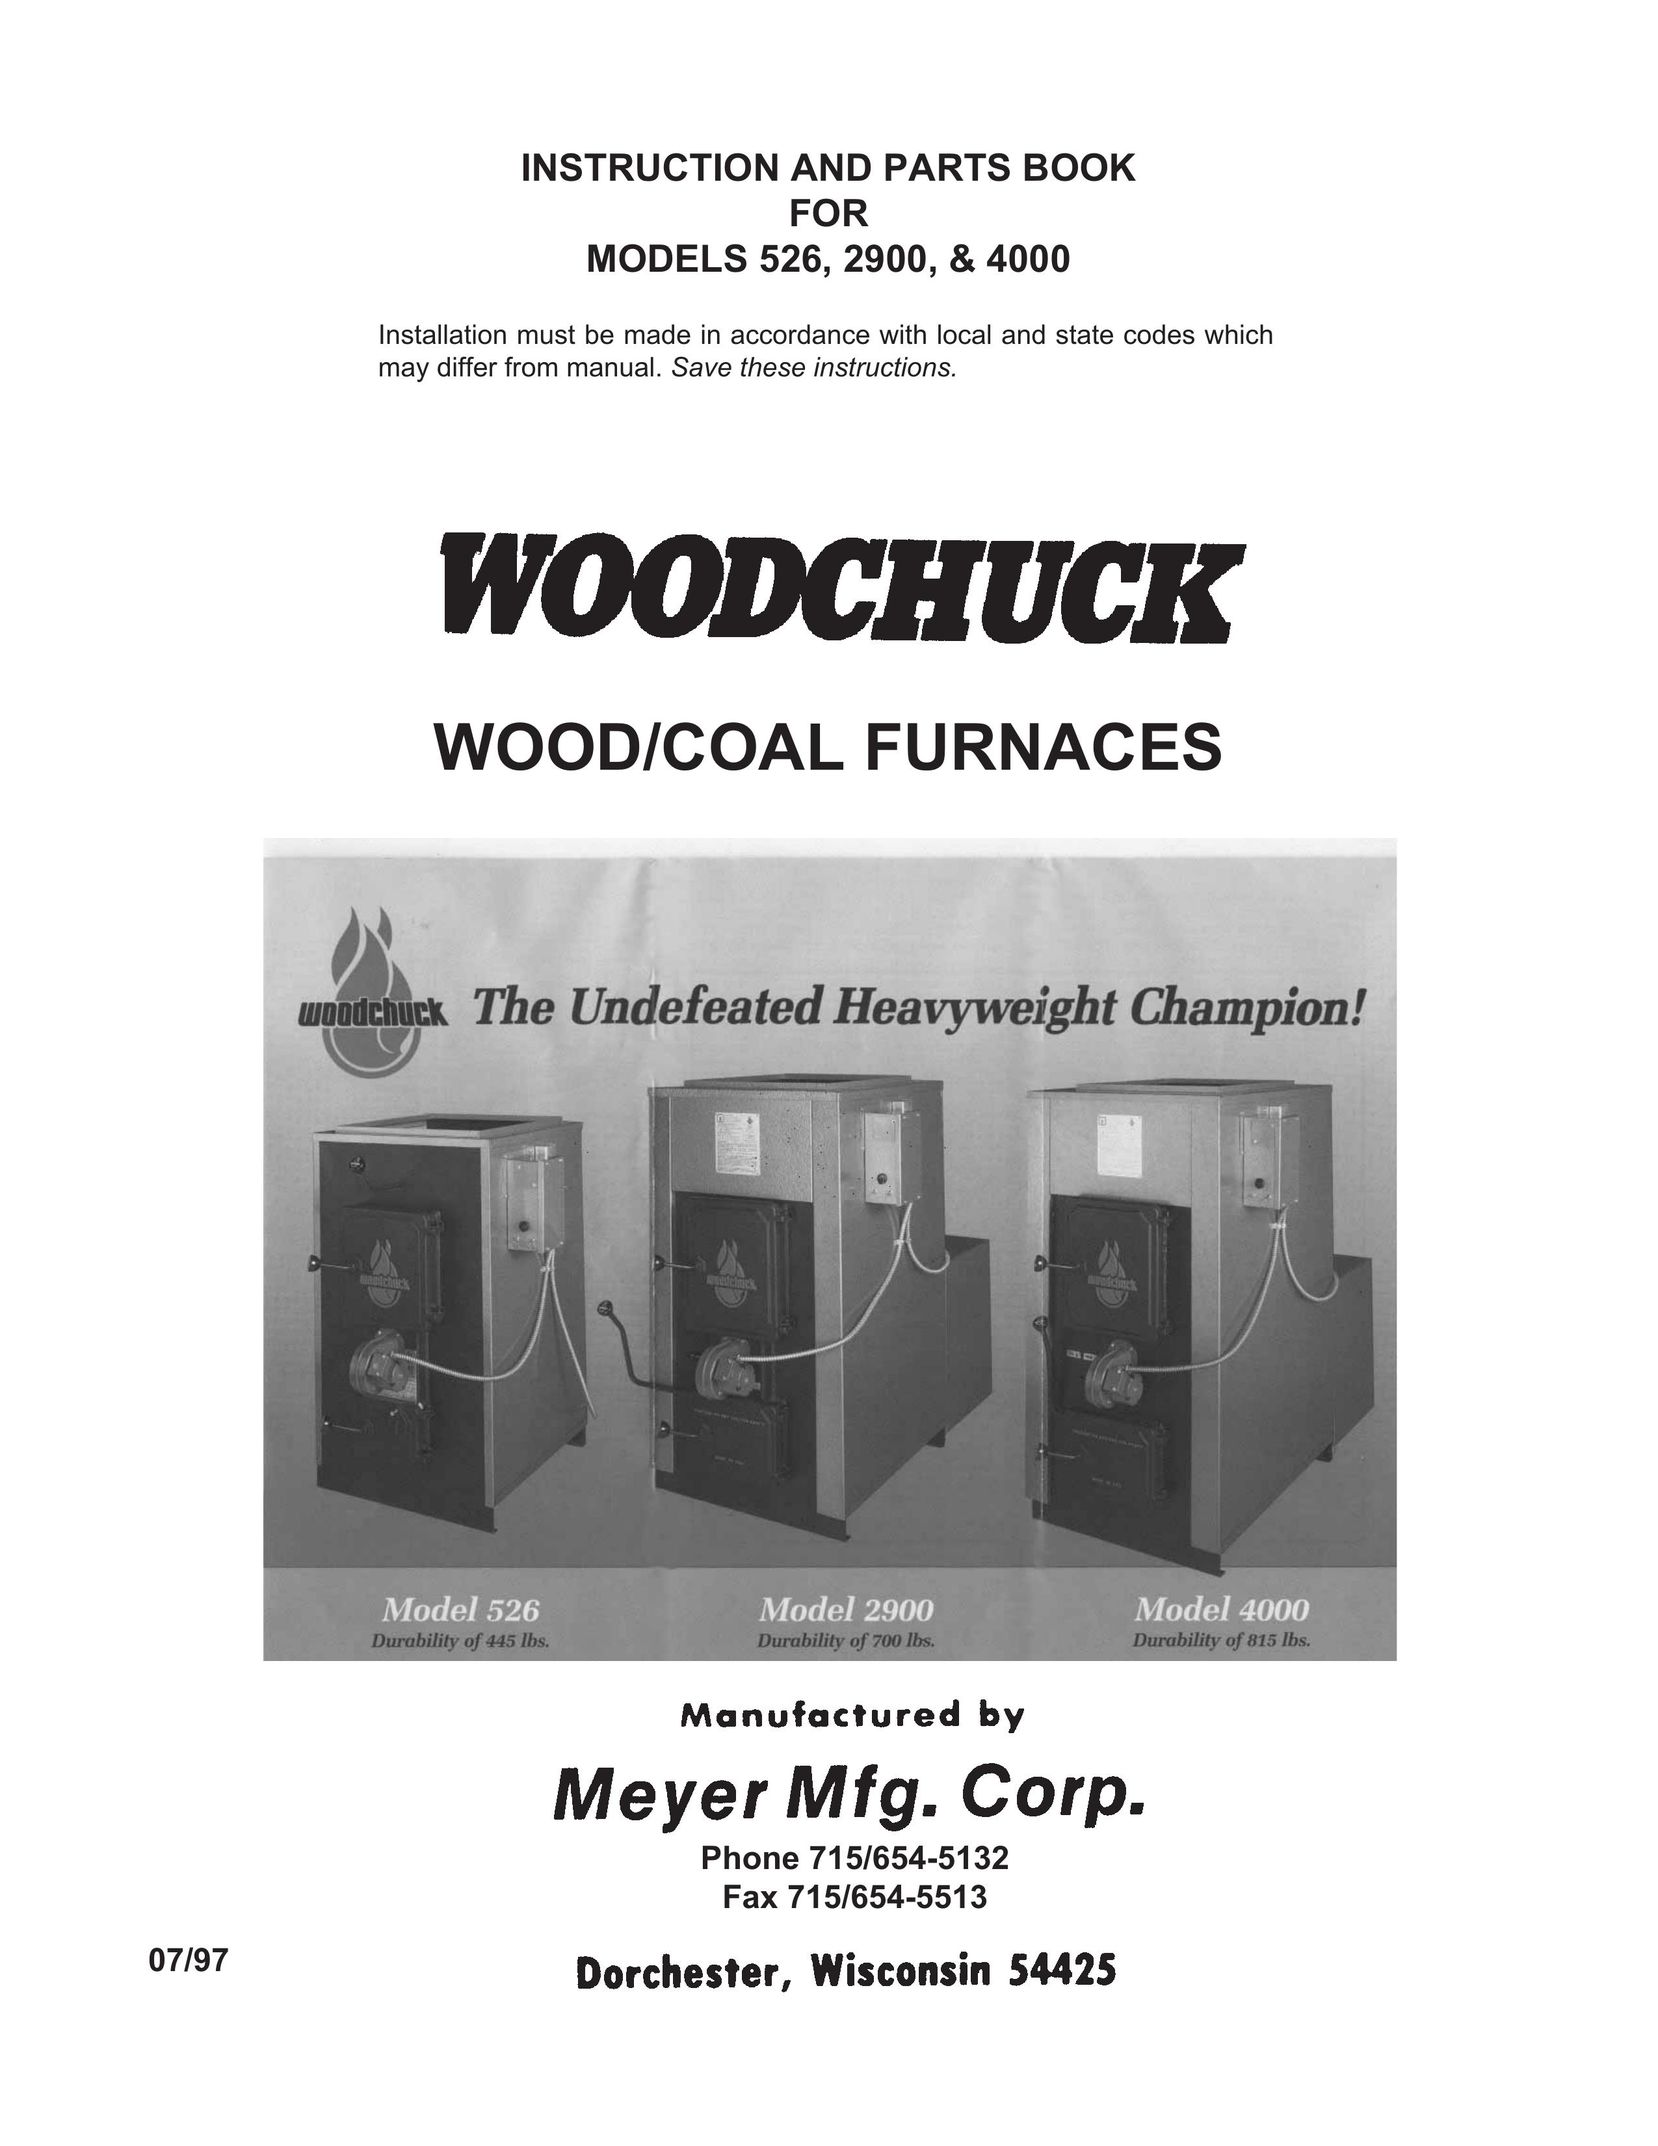 Meyer woodchuck Furnace User Manual